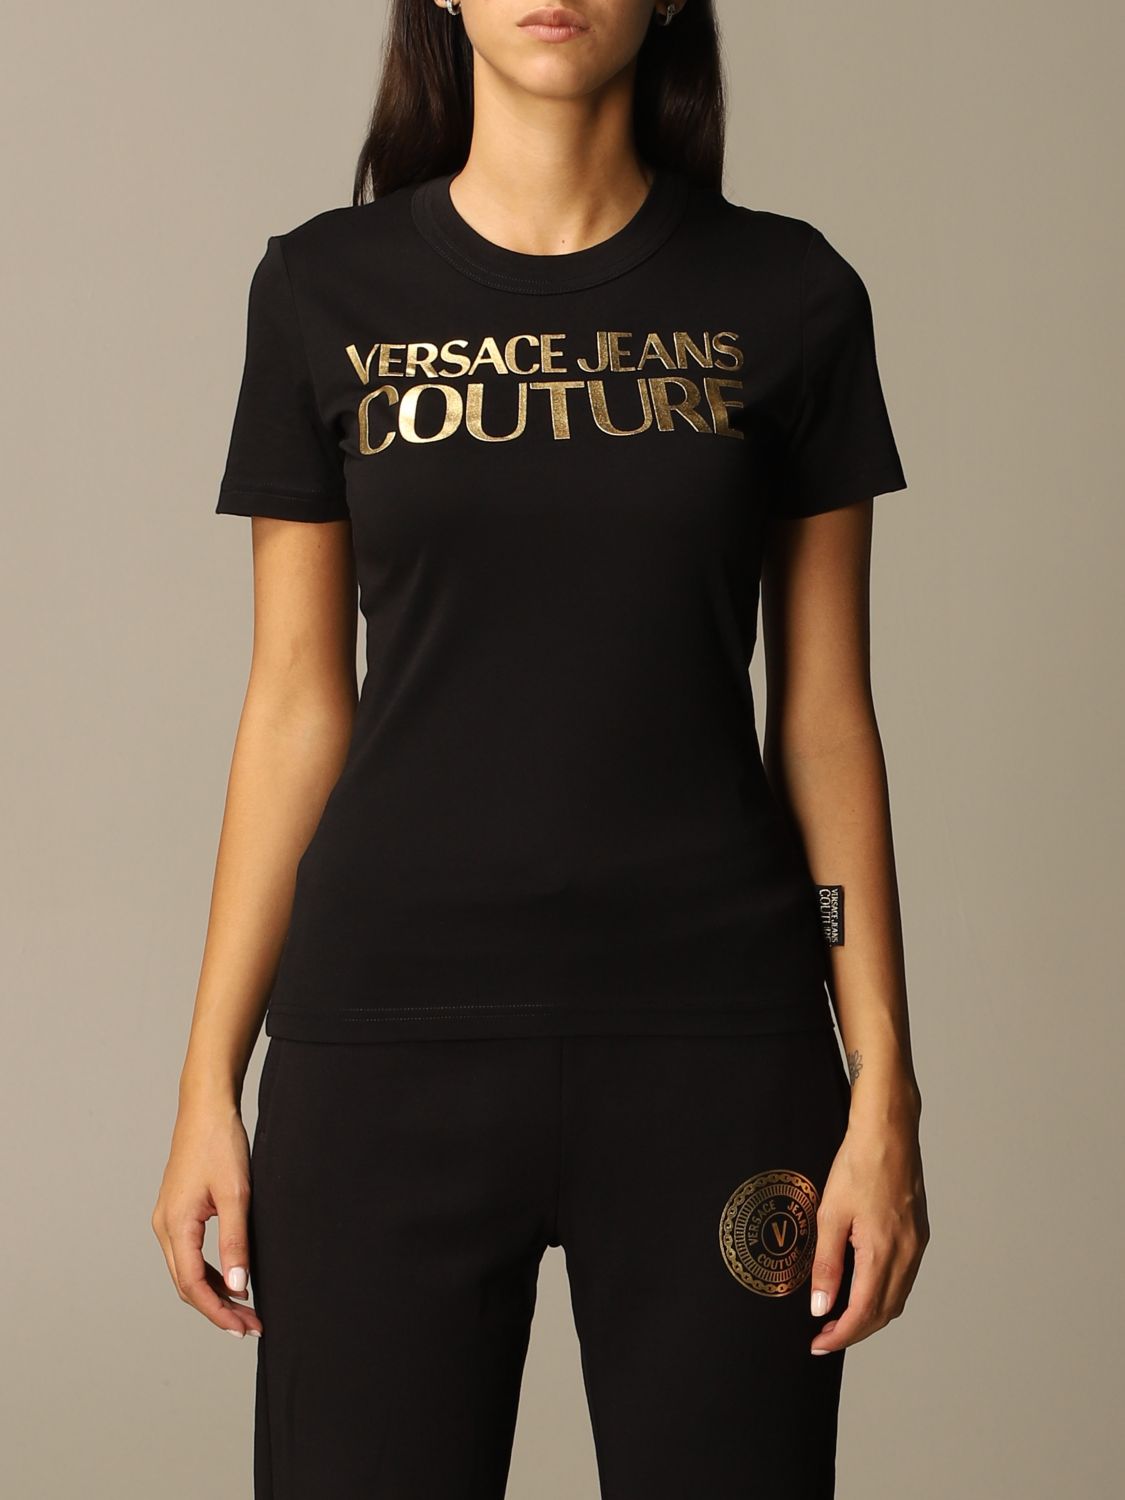 T-Shirt Versace Jeans Couture Women 